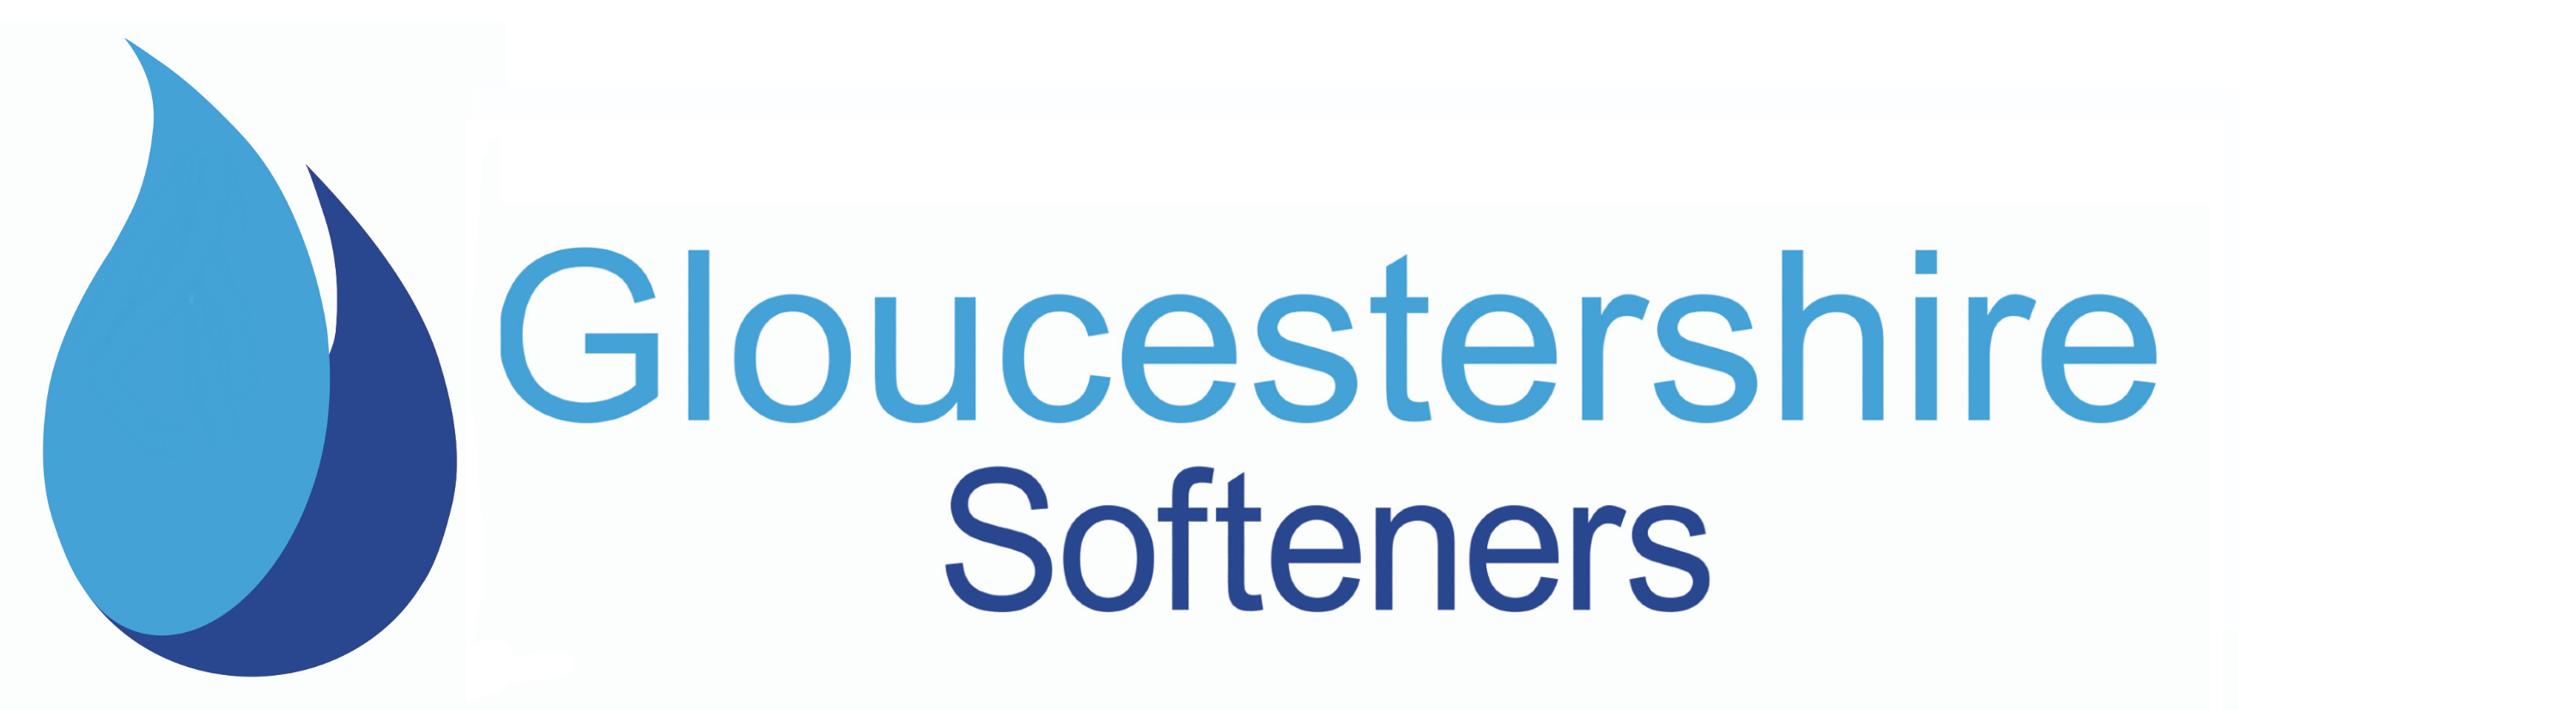 Gloucestershire Softeners